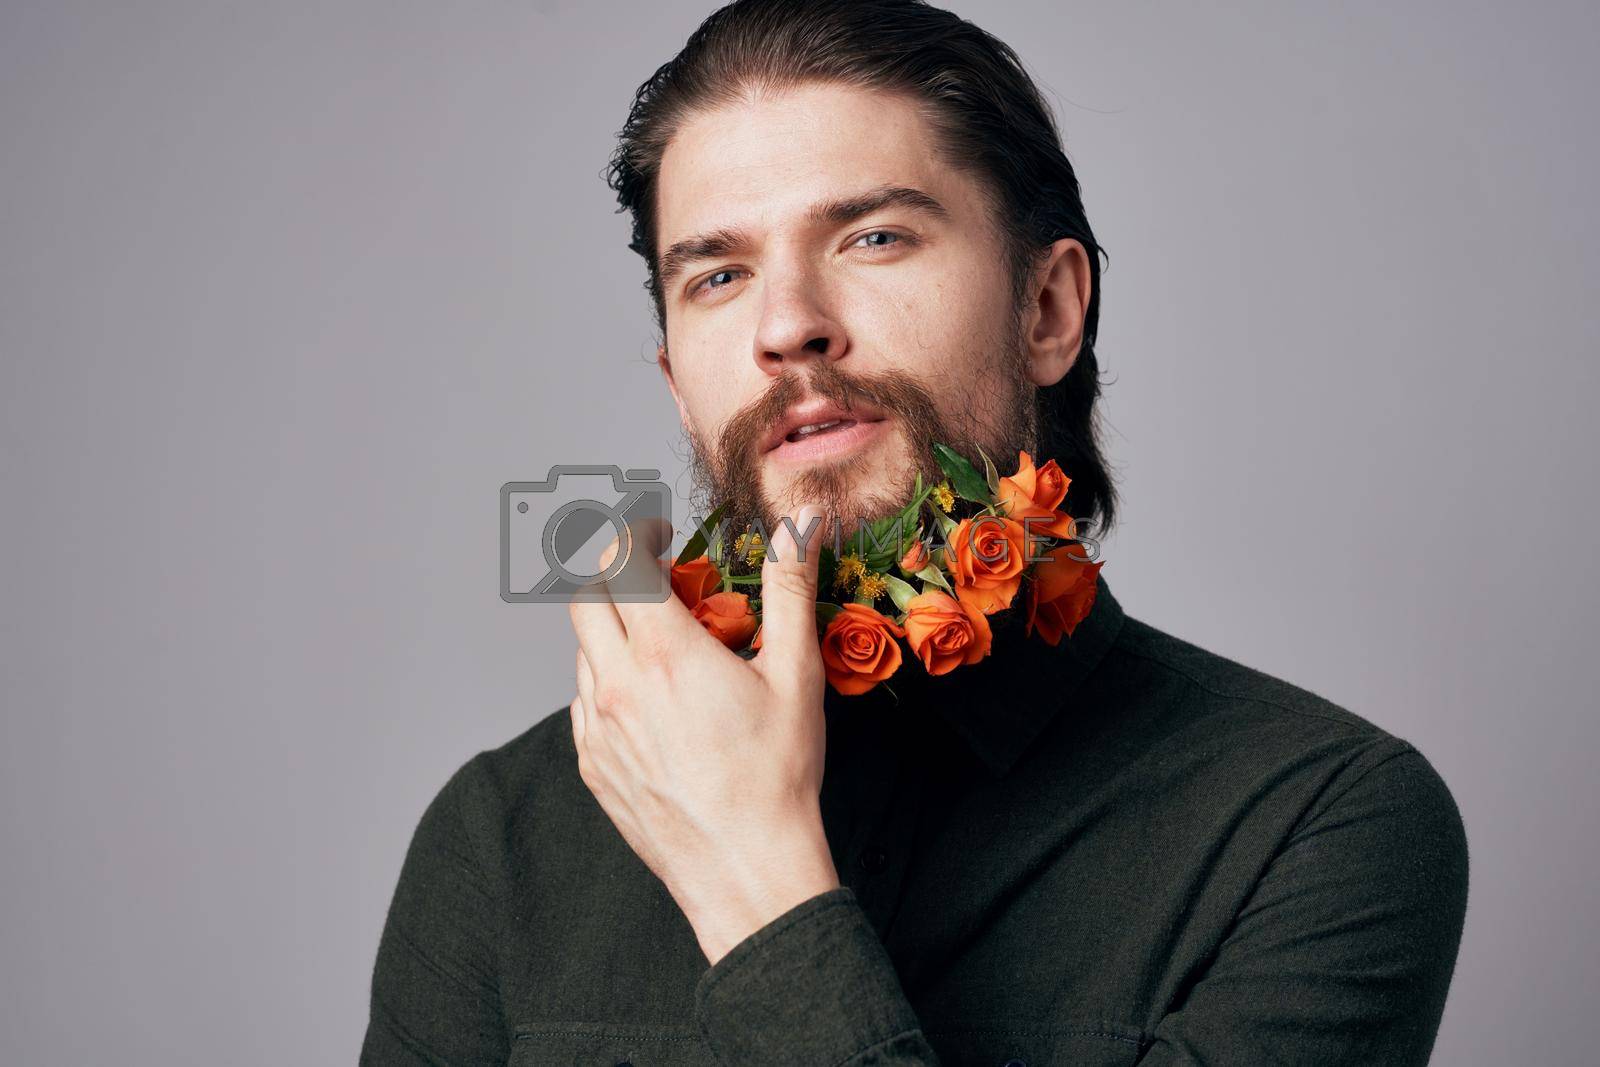 handsome man flowers in a beard black jacket elegant style romance. High quality photo